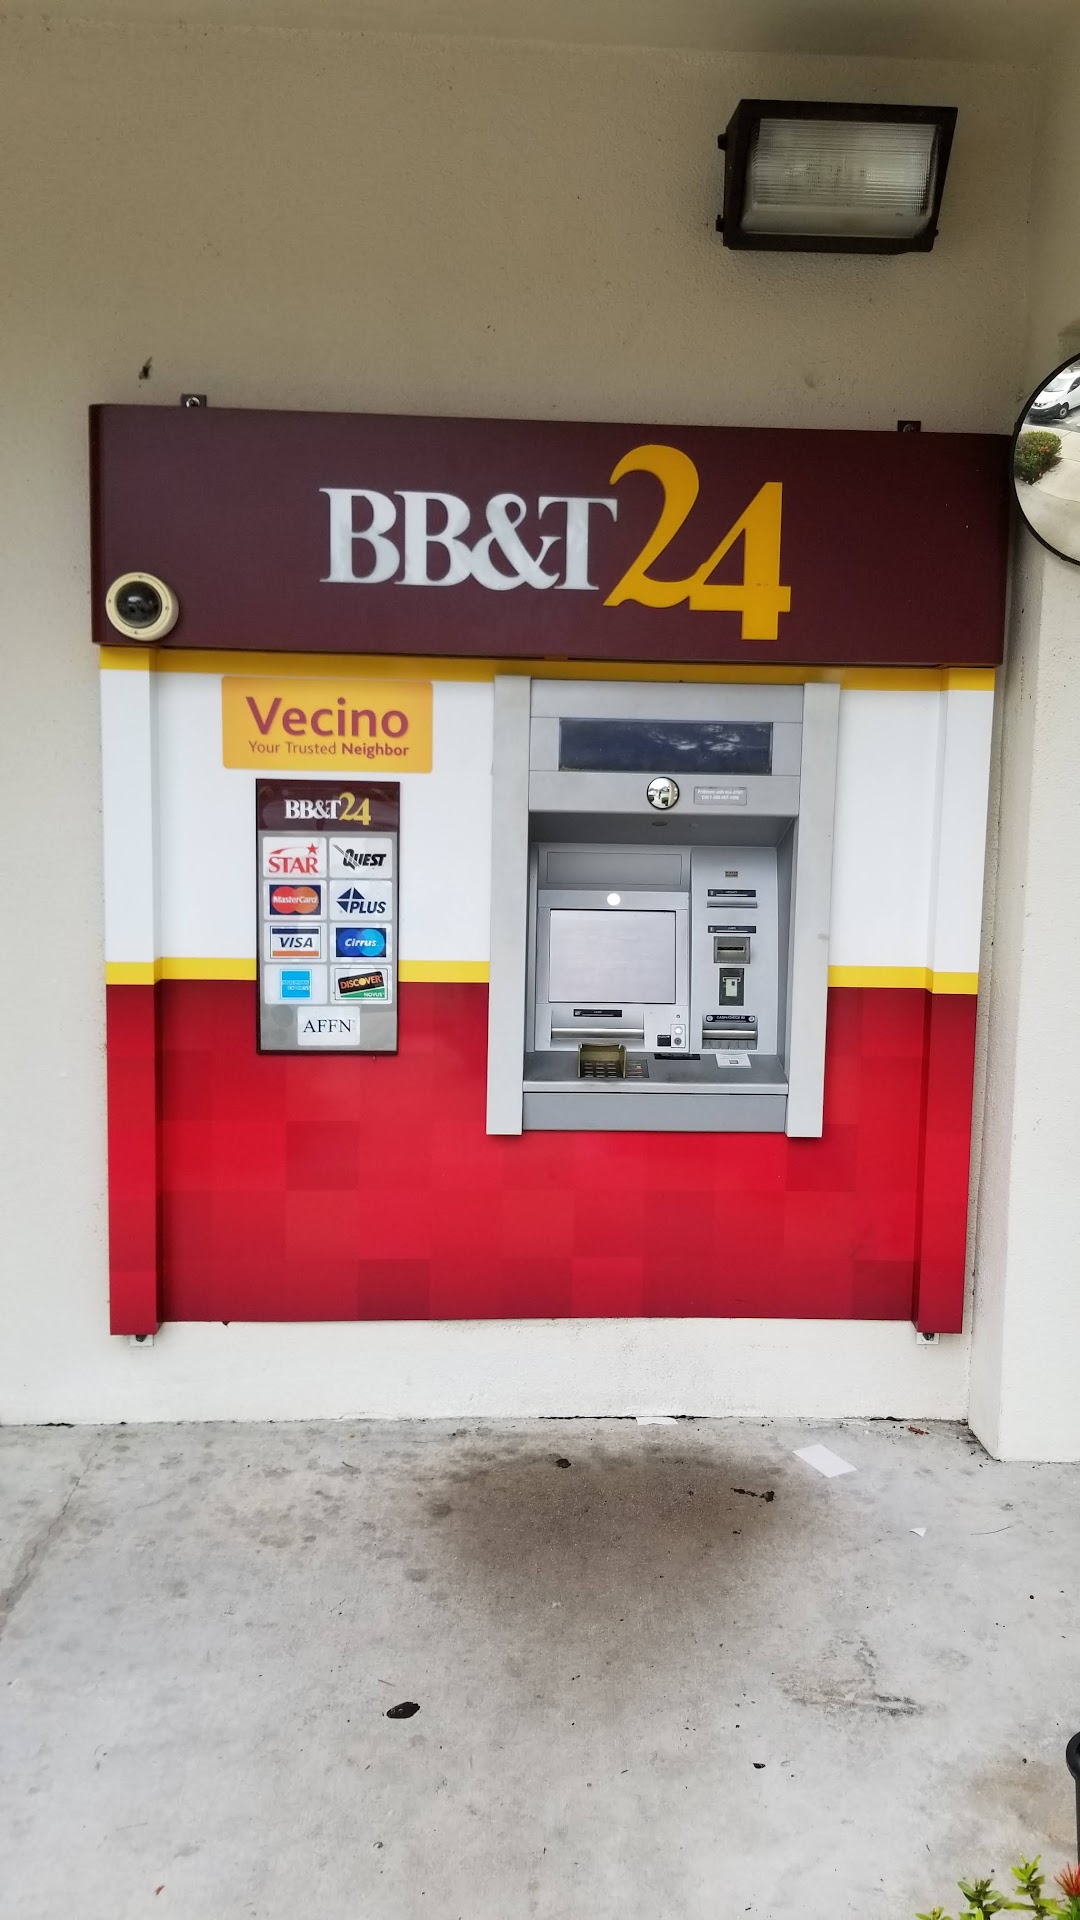 BB&T ATM